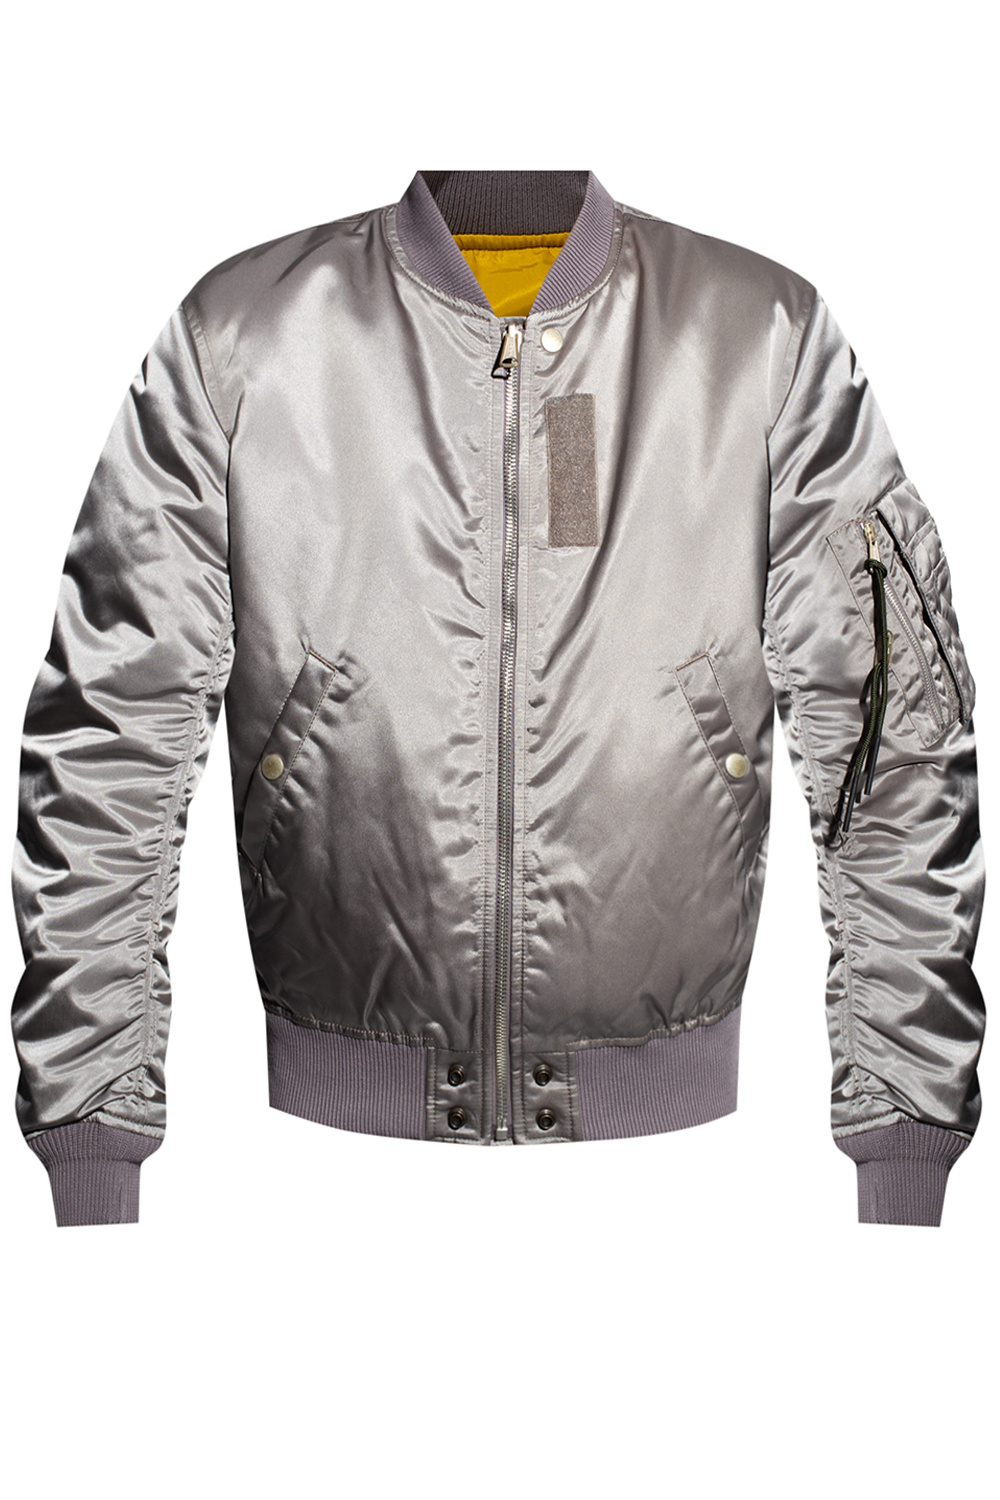 Diesel Reversible bomber jacket | Men's Clothing | Vitkac